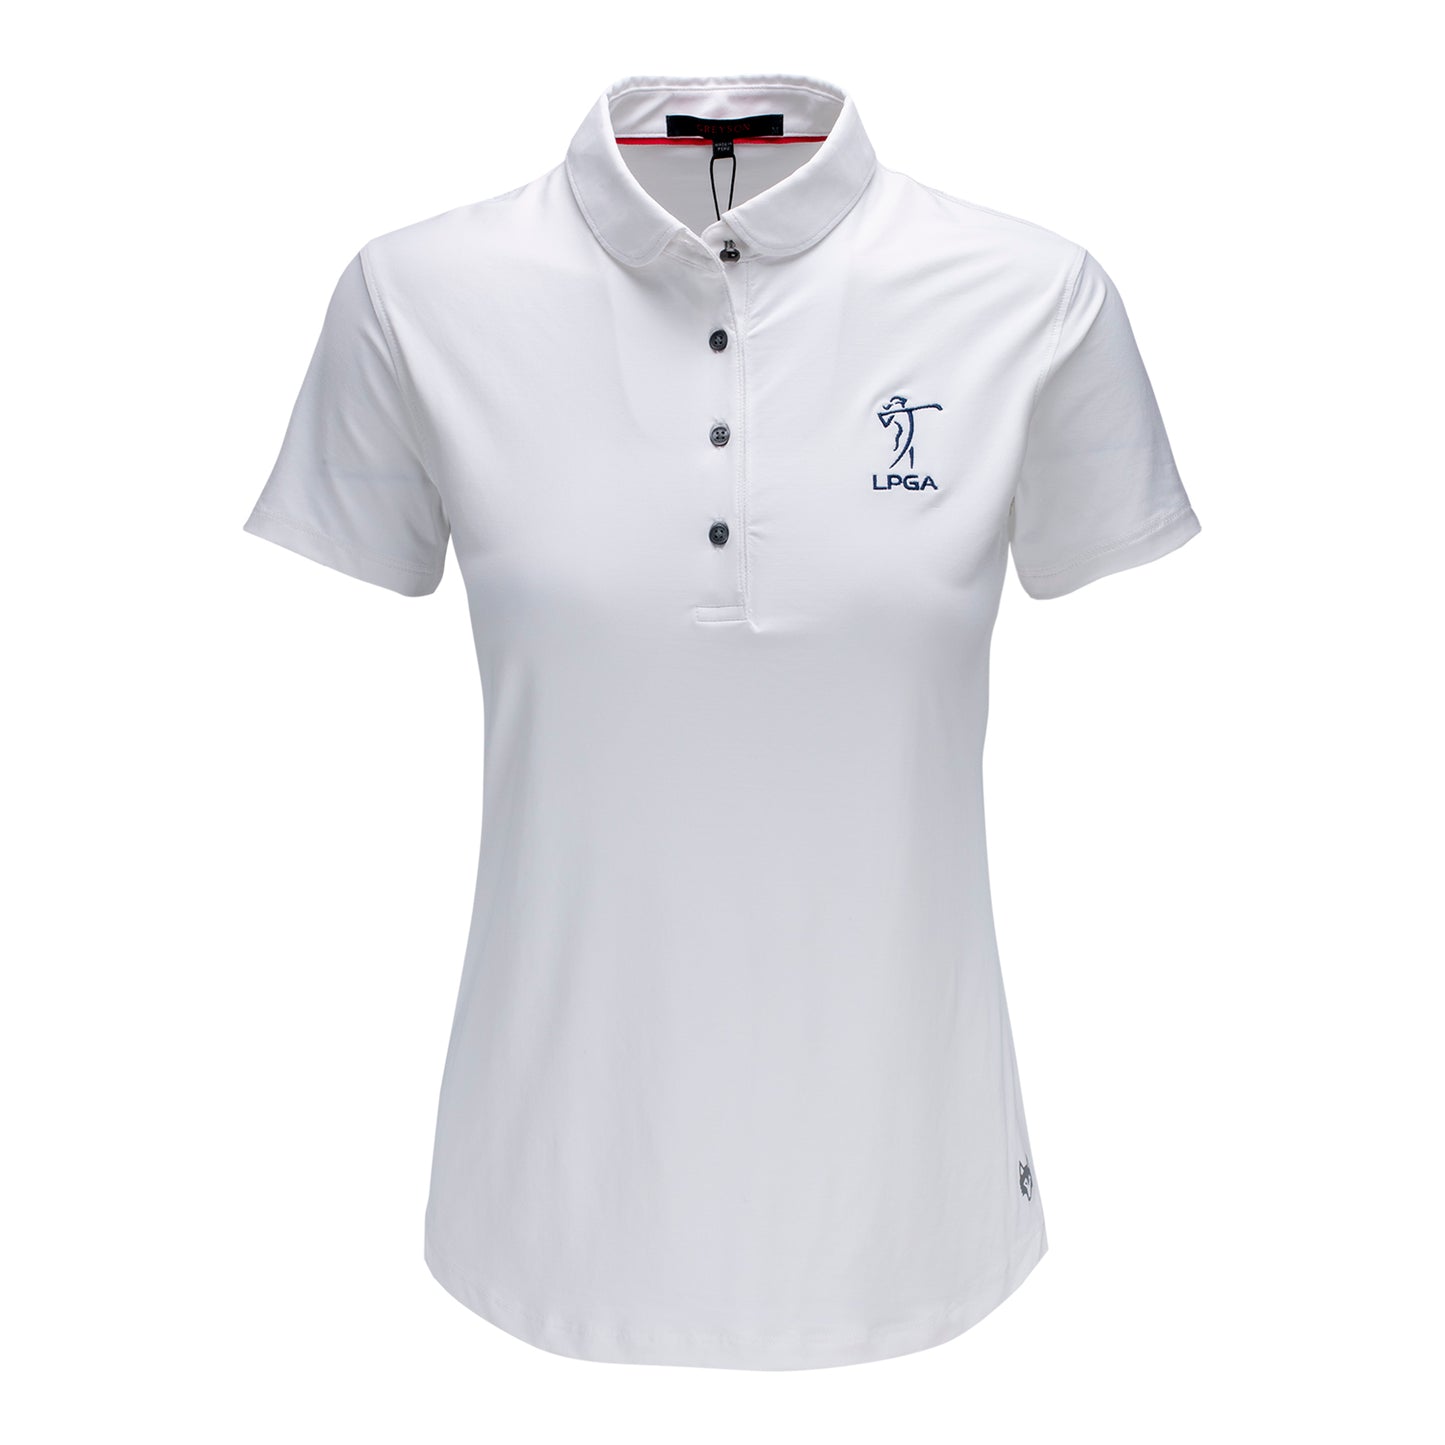 Greyson Clothiers LPGA Women's Scarlett Golf Polo - Front View